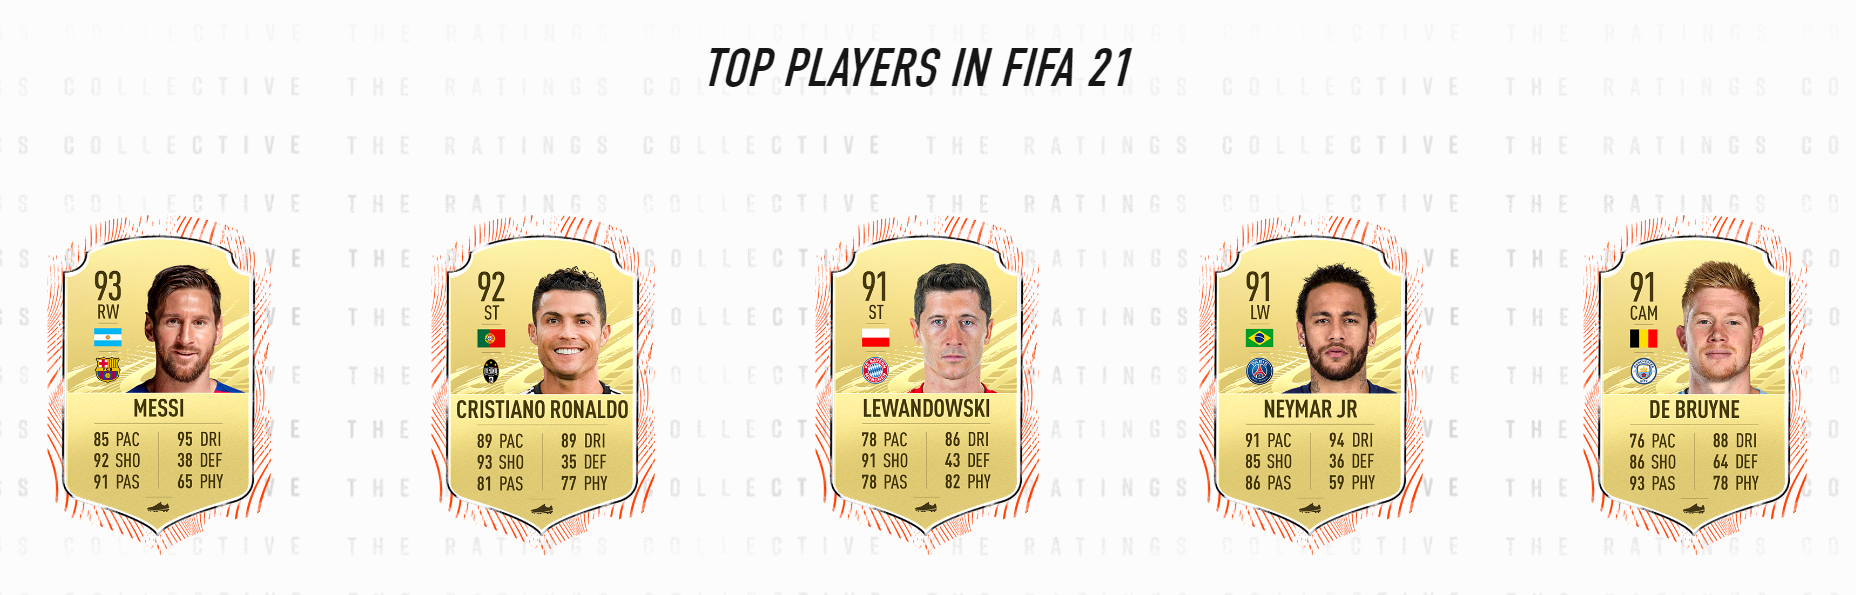 Top 5 spillere i FIFA 21